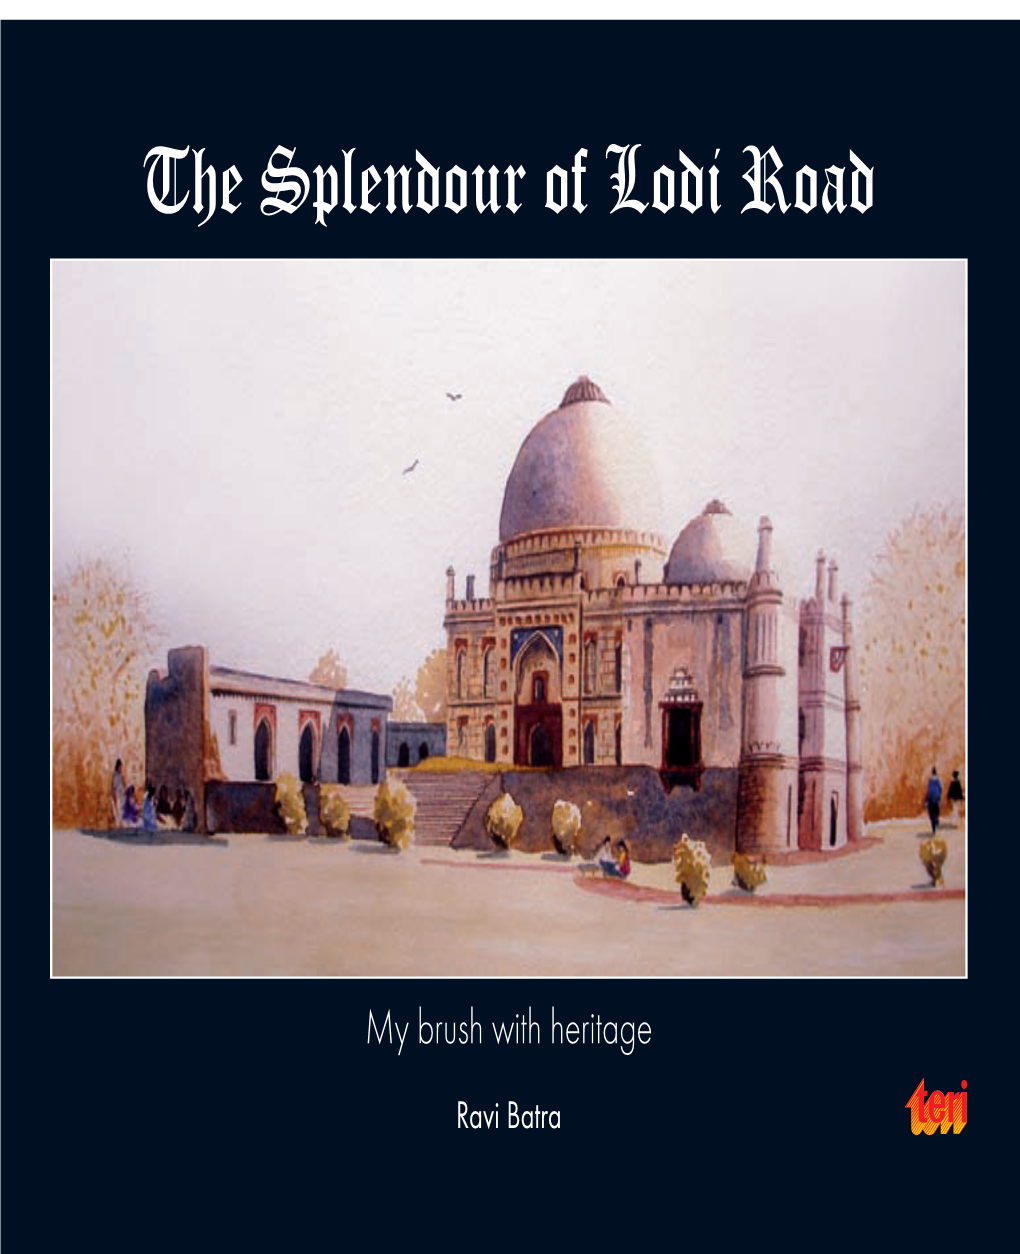 The Splendour of Lodi Road